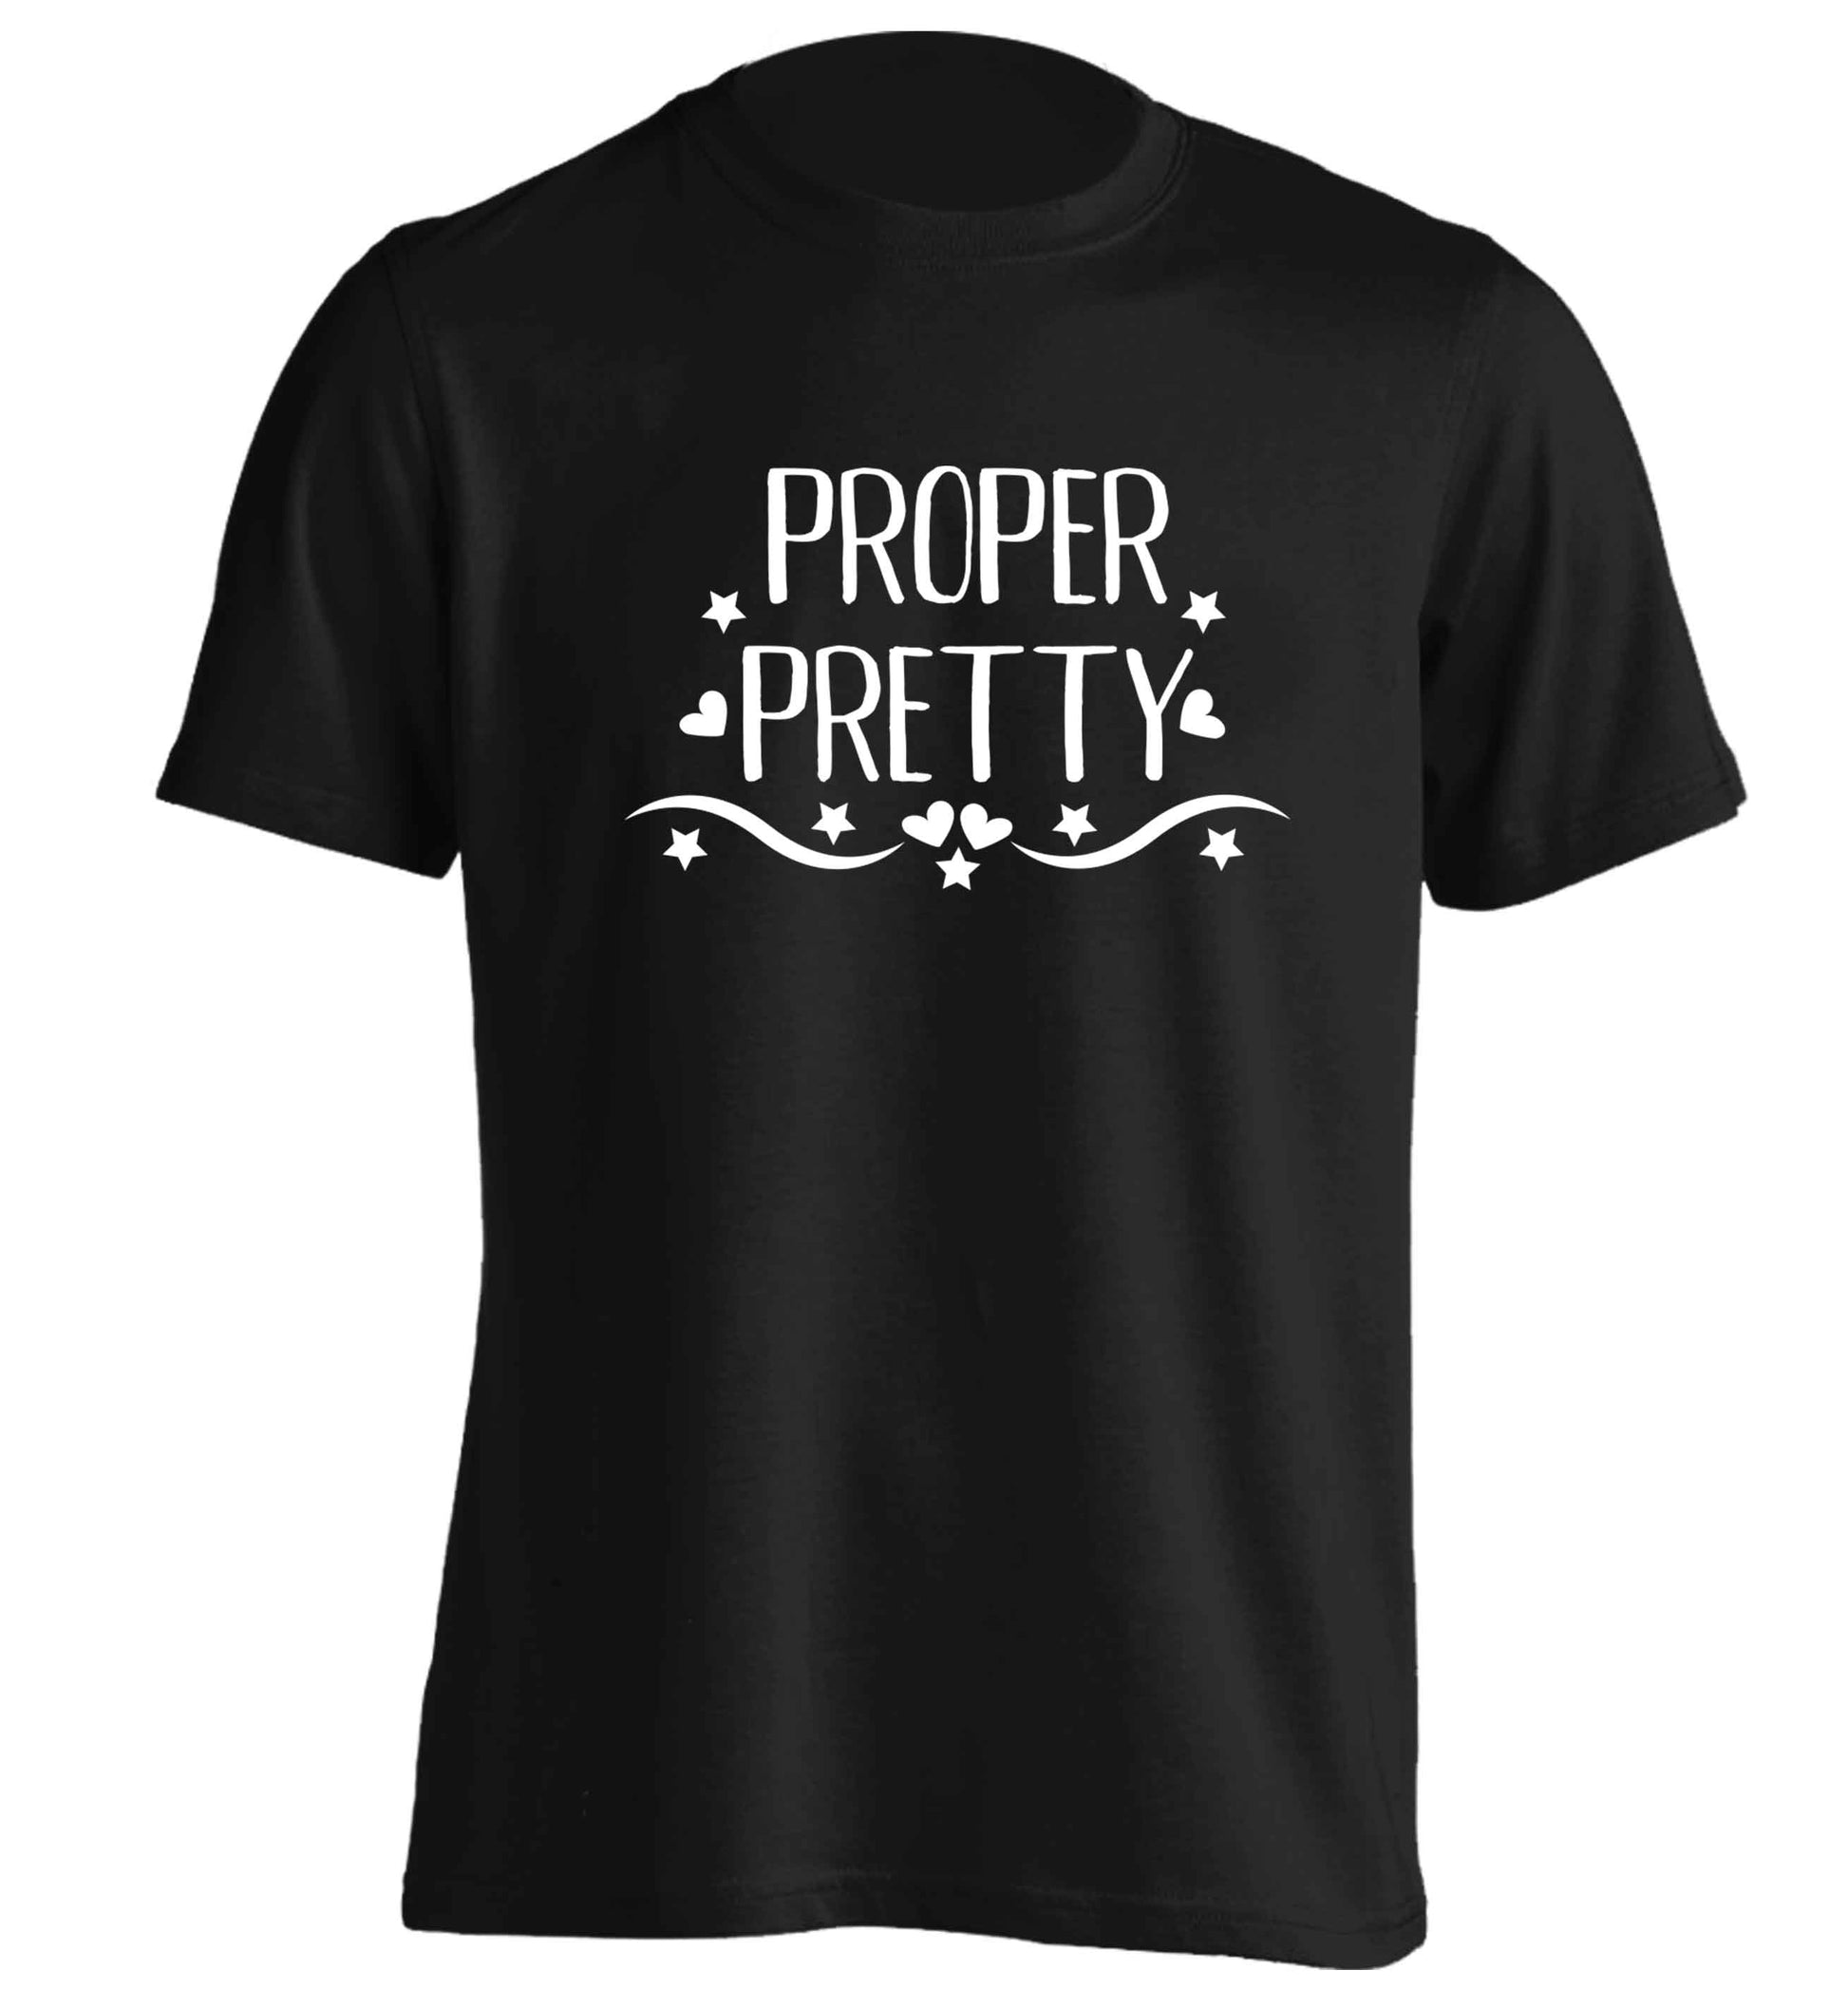 Proper pretty adults unisex black Tshirt 2XL